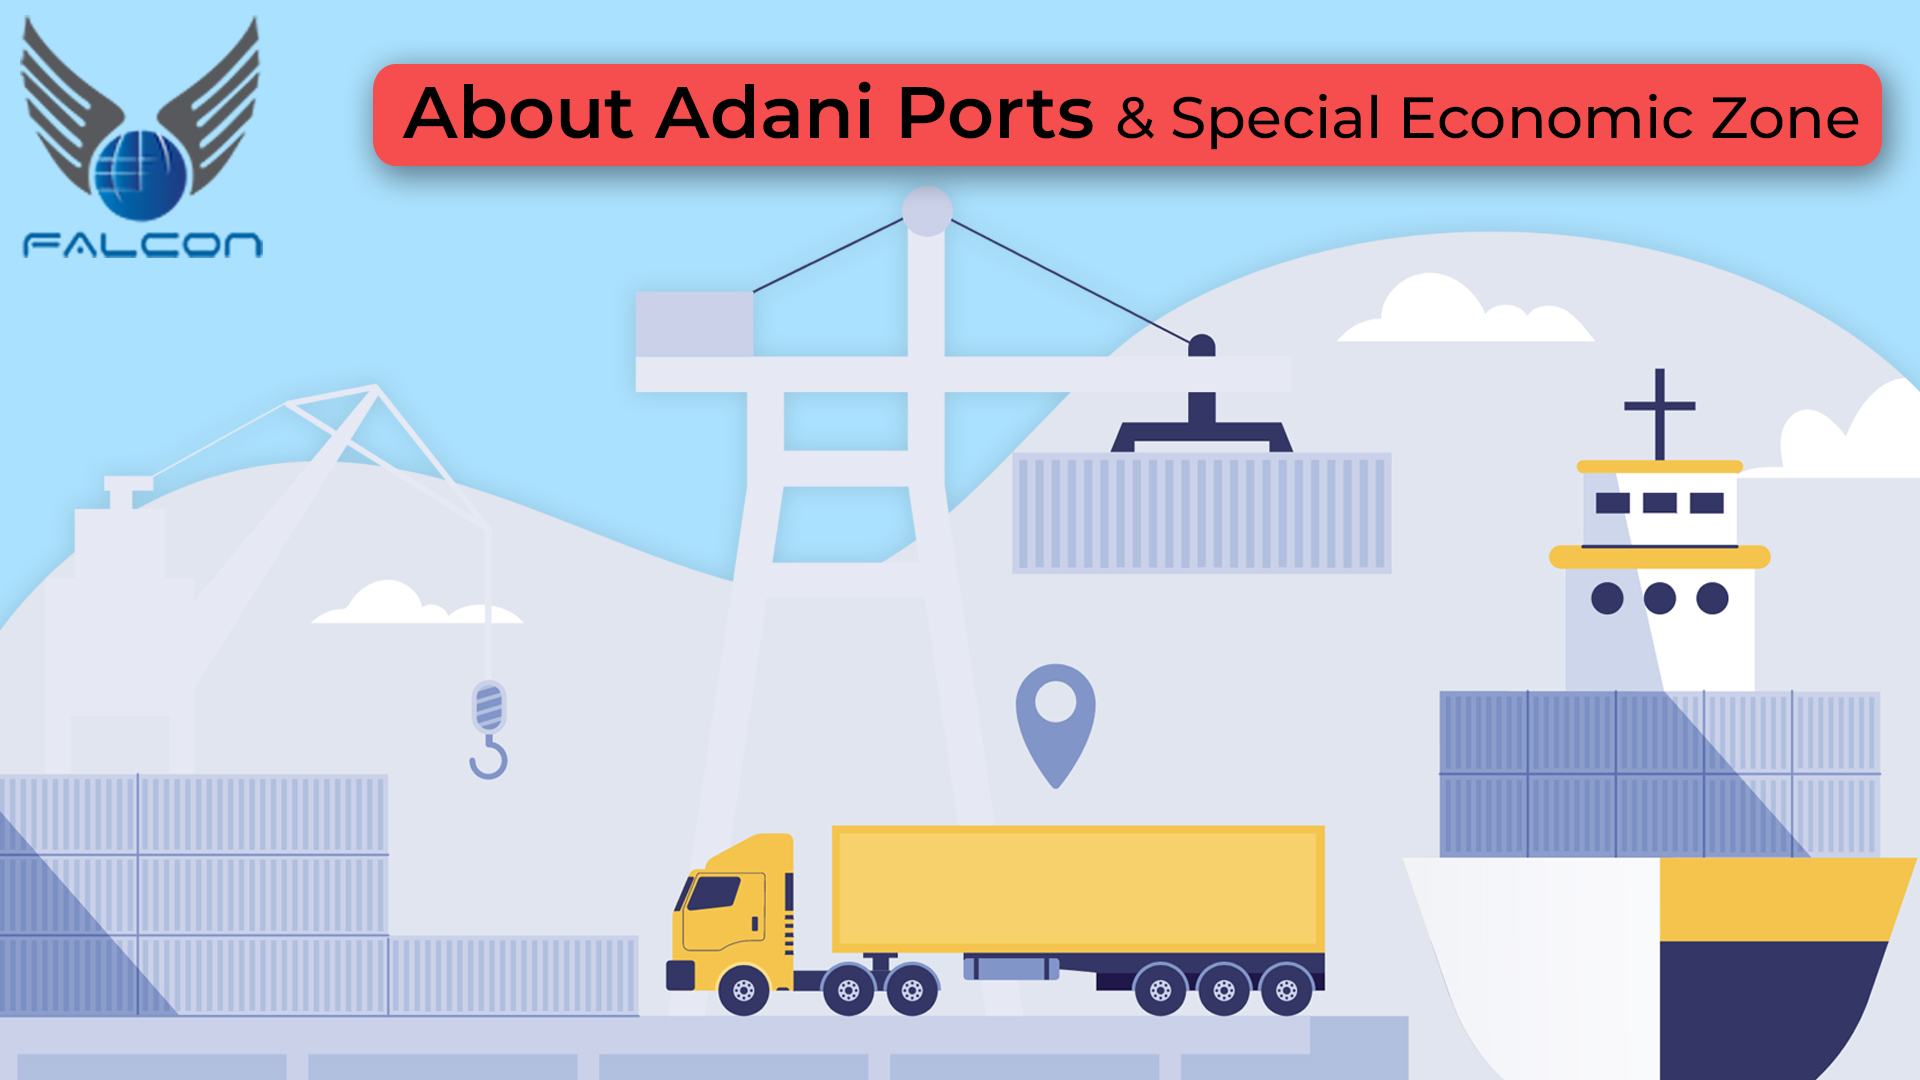 About ADANI PORTS & SPECIAL ECONOMIC ZONE (SEZ)